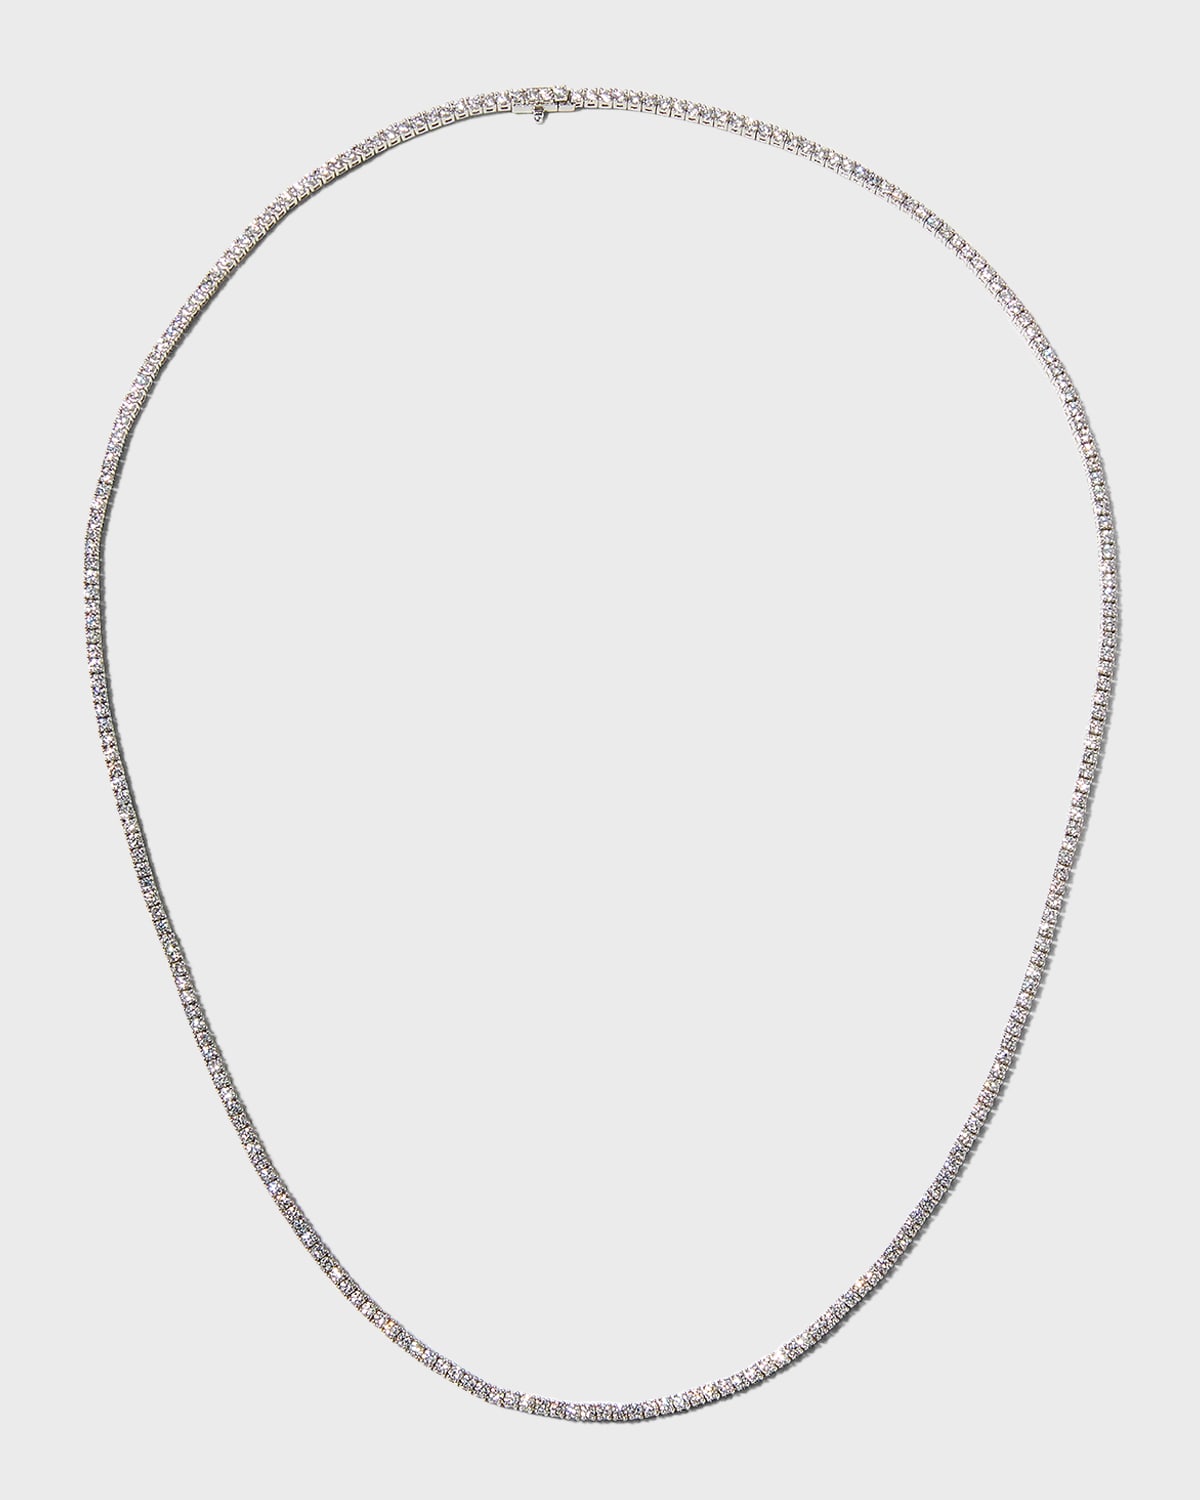 18k White Gold 4-Prong Diamond Line Necklace, 16.5"L